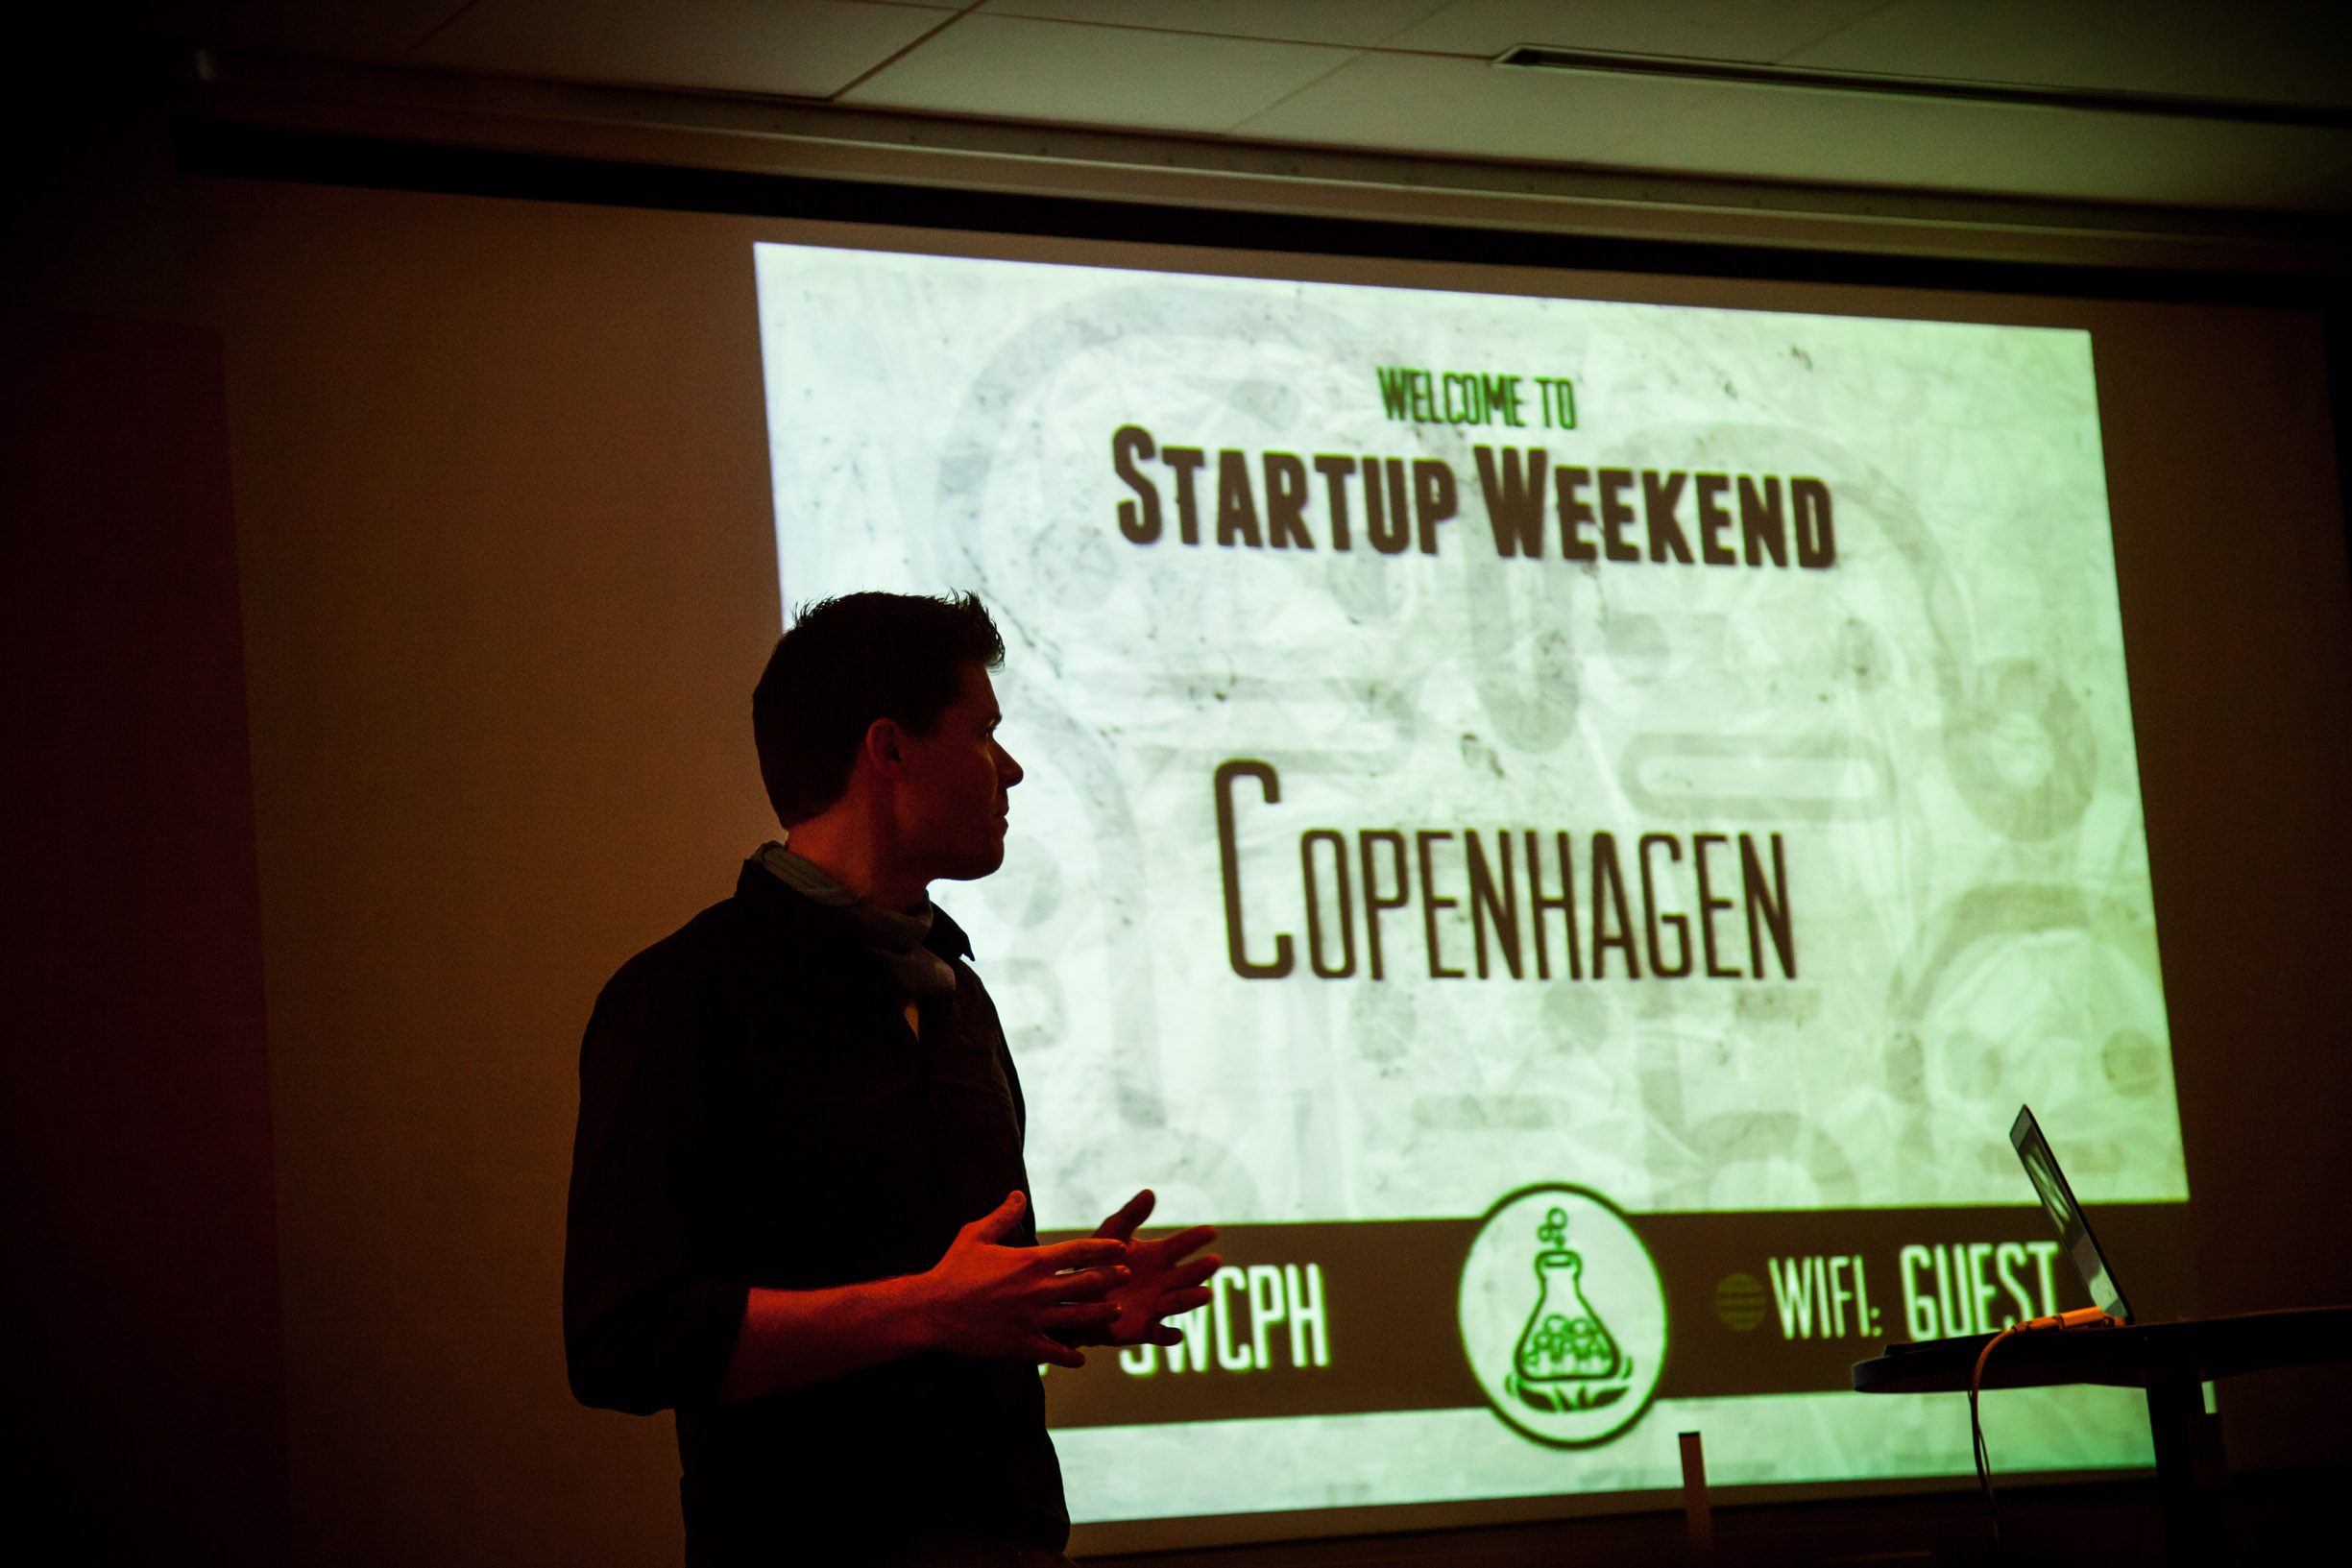 Startup weekend 2012